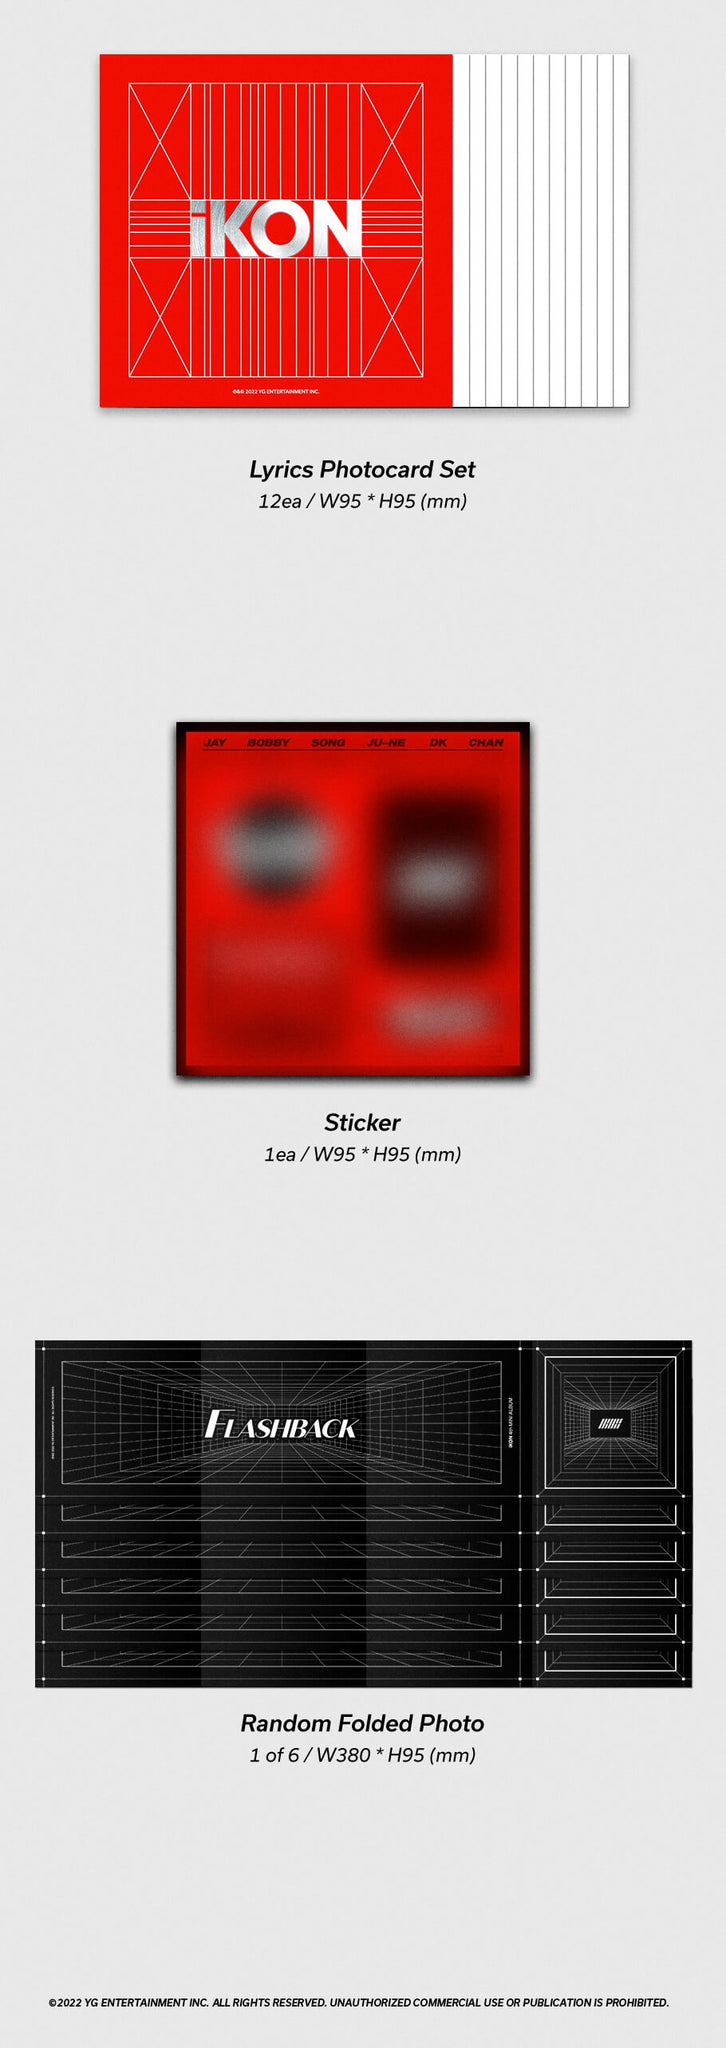 iKON FLASHBACK (KiT Version) Inclusions Lyrics Photocard Set Sticker Random Folded Photo